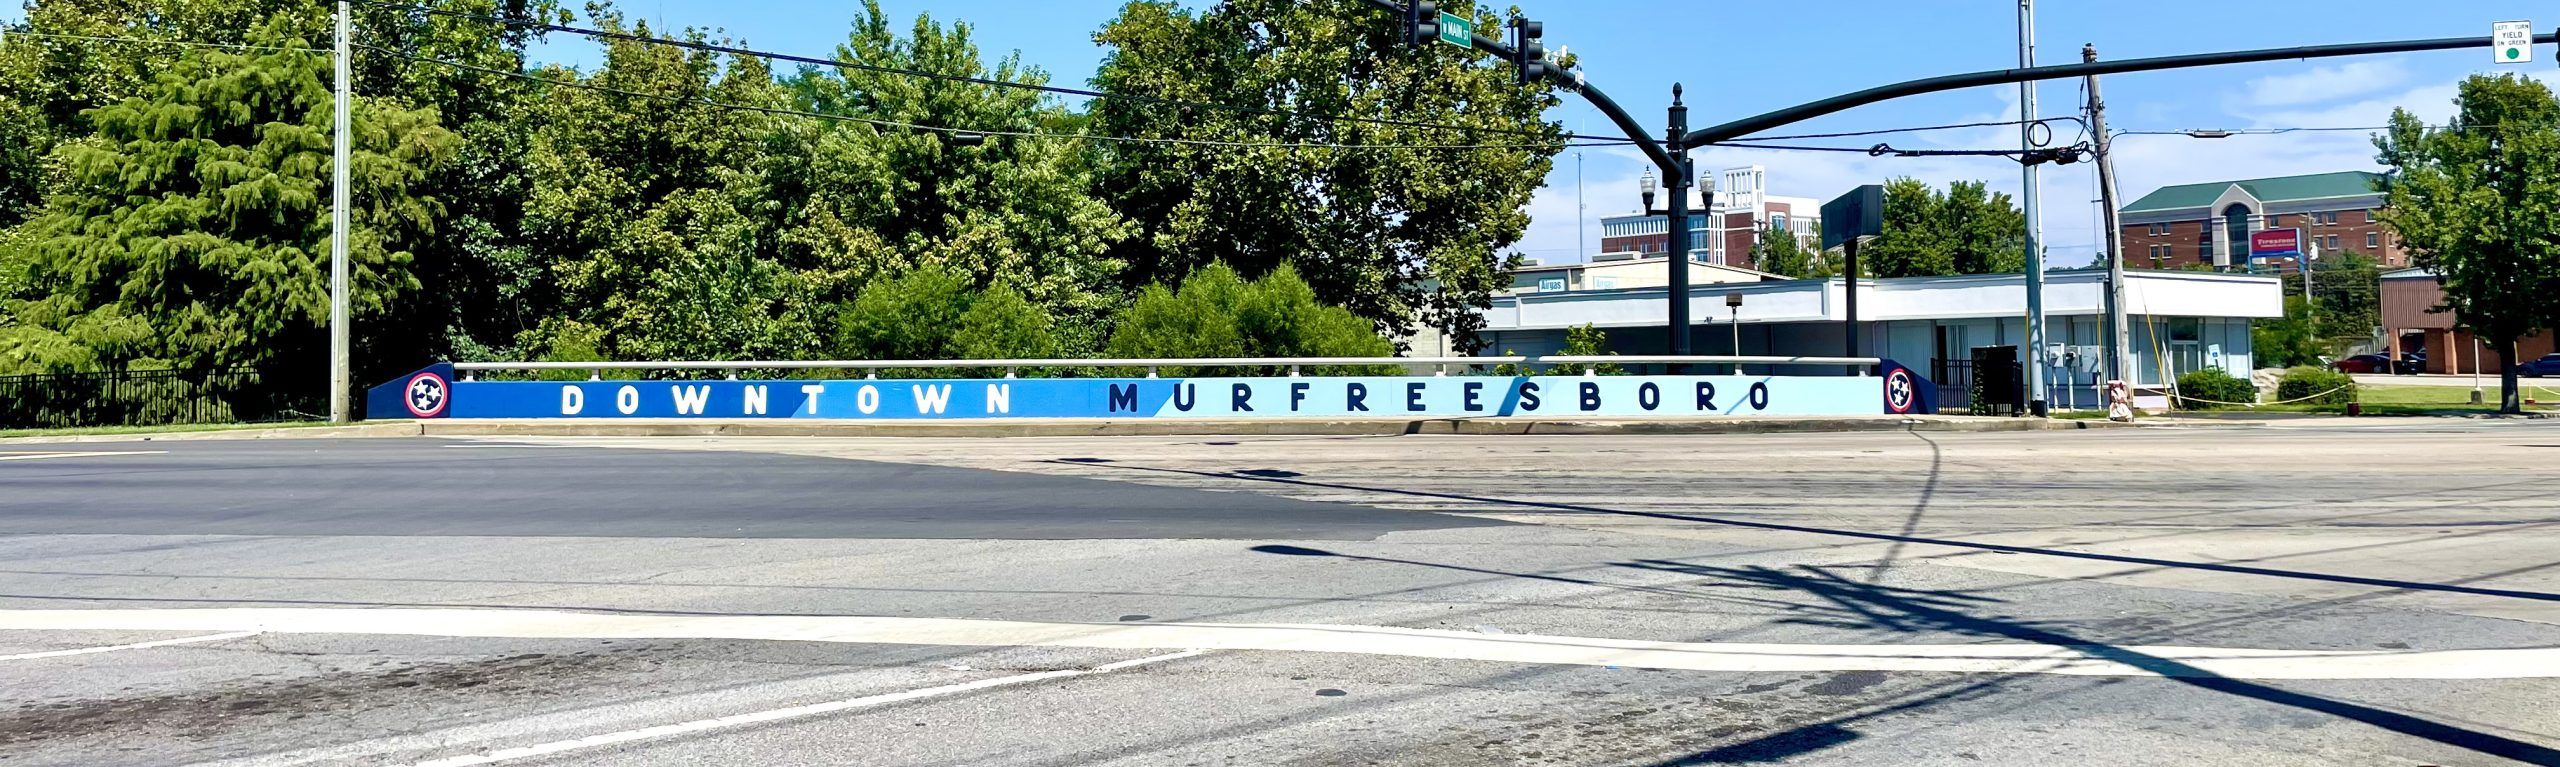 Murfreesboro Public Square